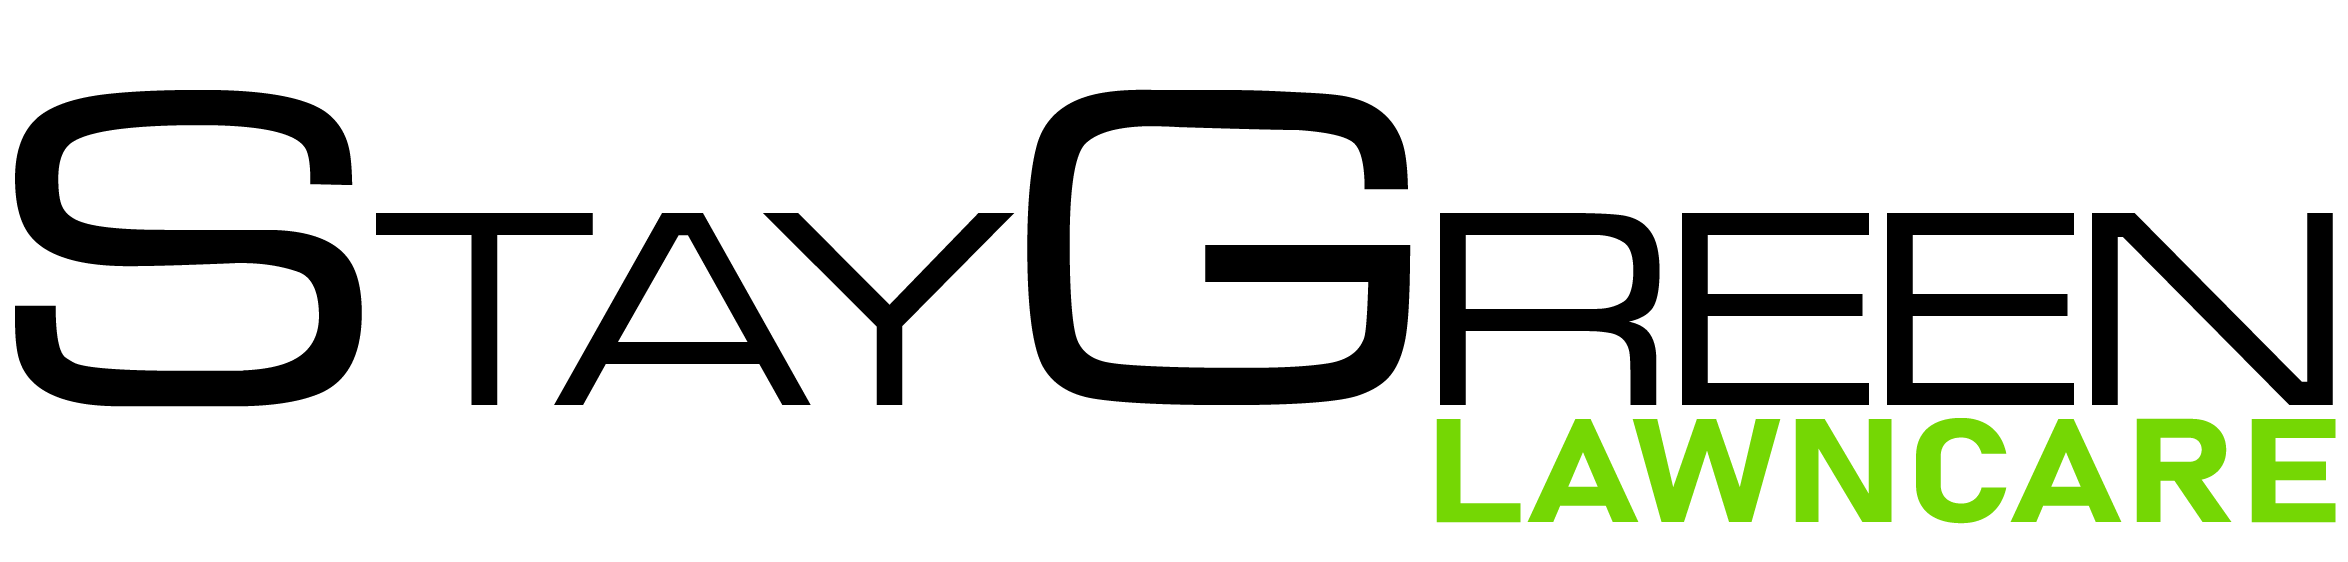 Staygreen Lawncare, LLC Logo